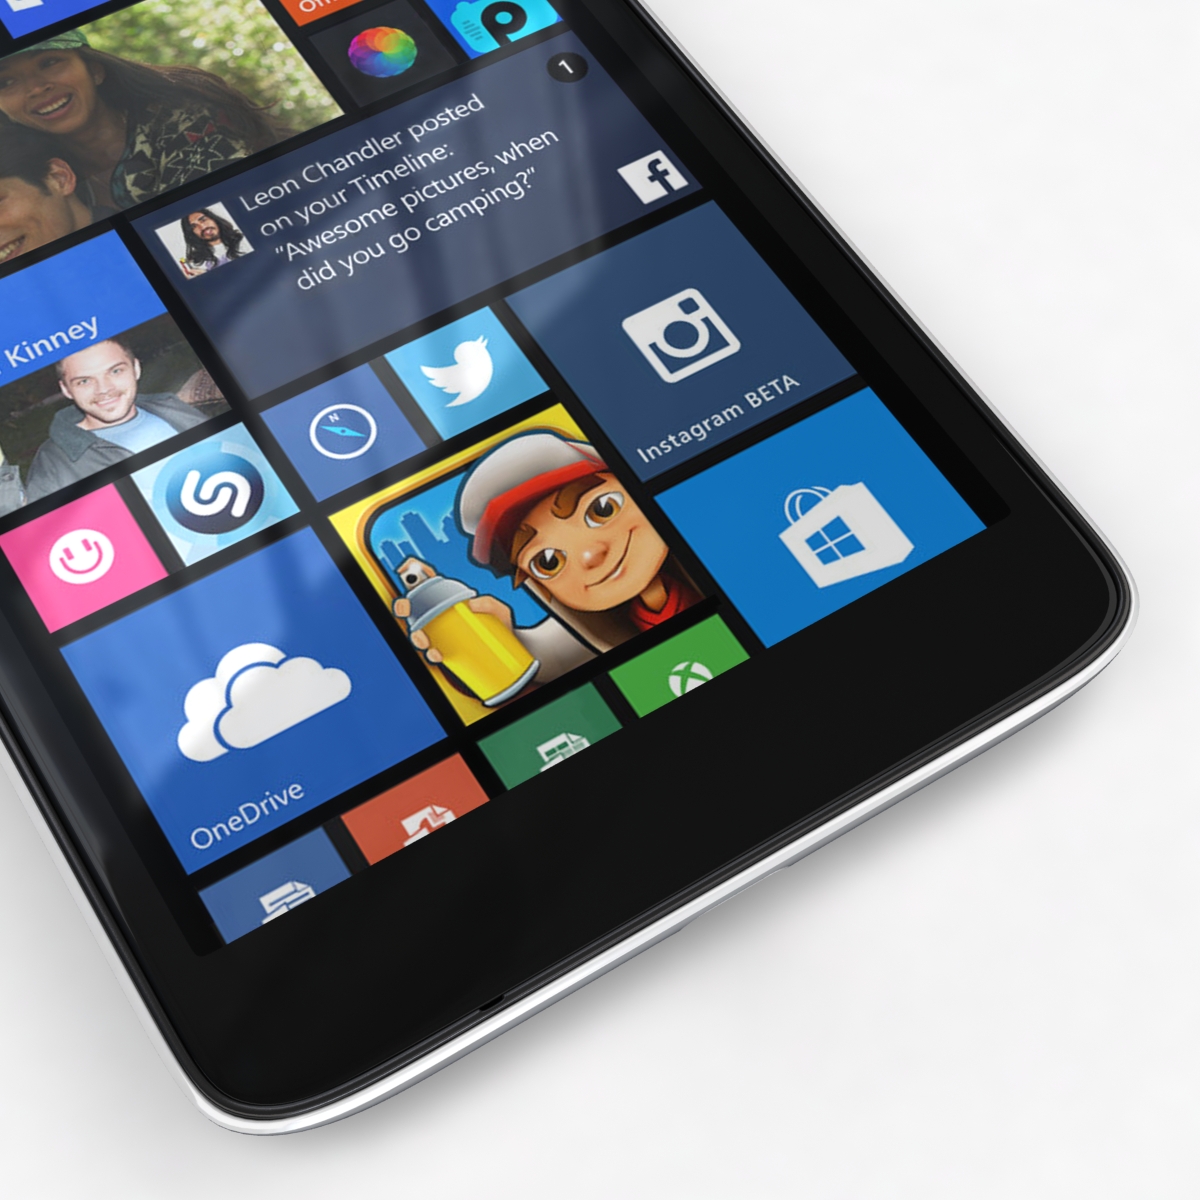 Microsoft lumia 535 white